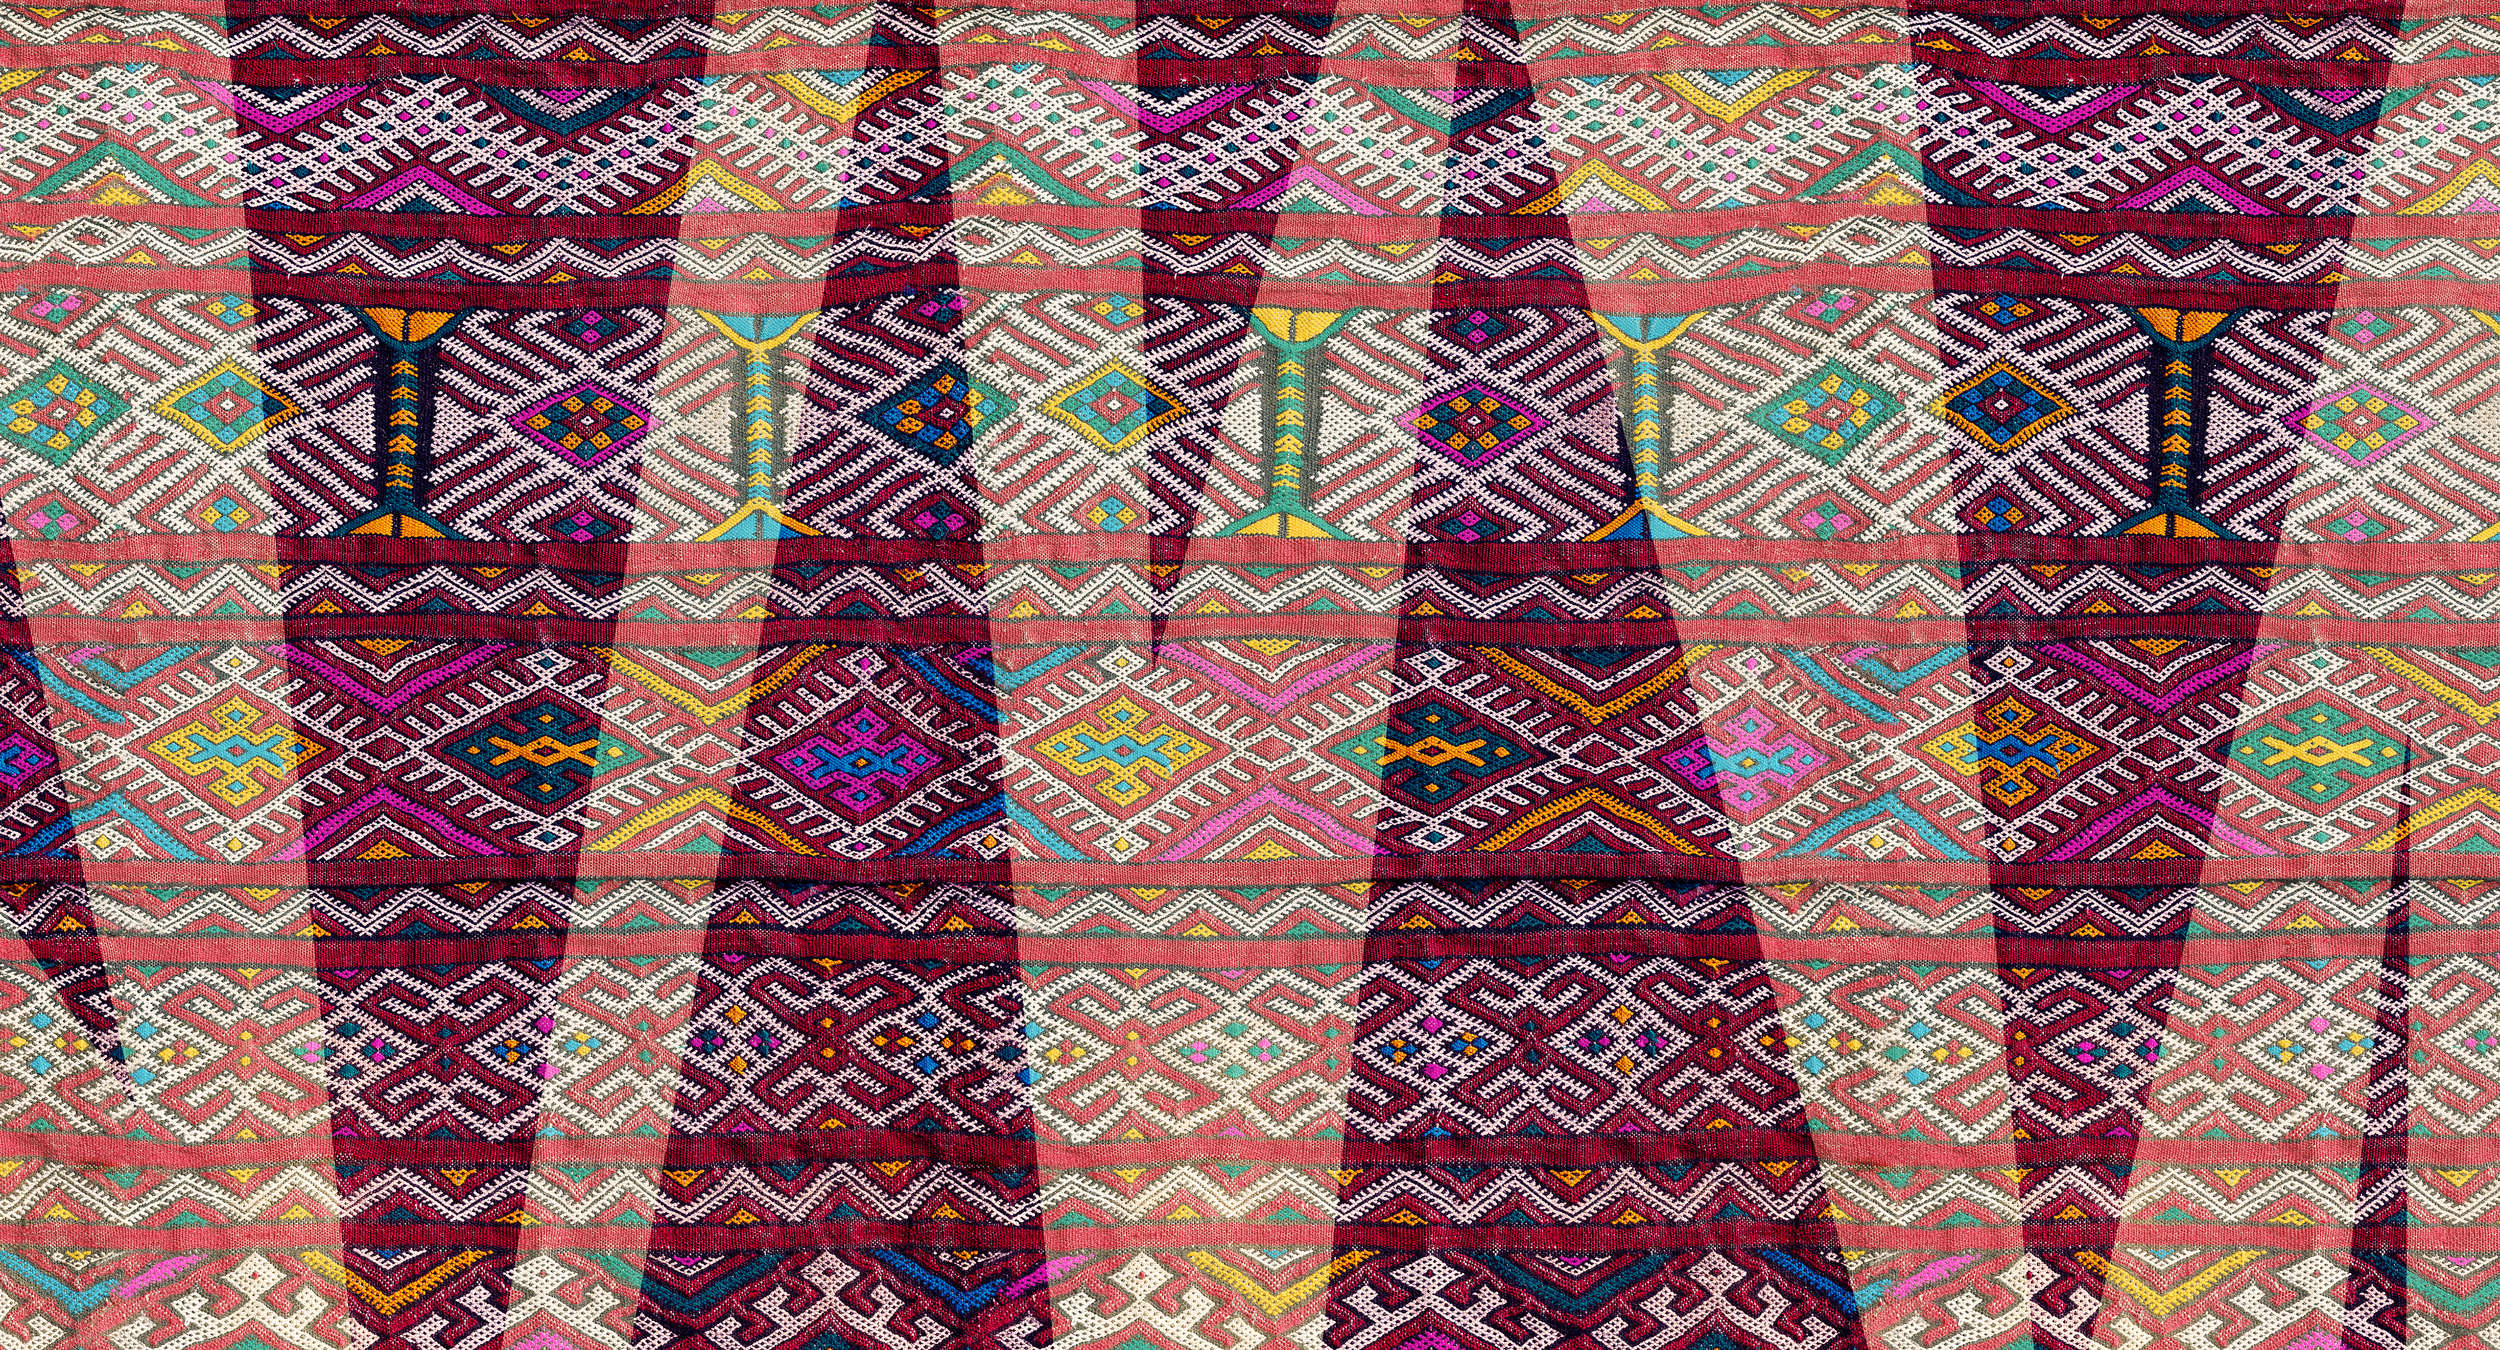             Fotomurali in stile etnico con motivi indigeni intrecciati - viola, verde, arancione
        